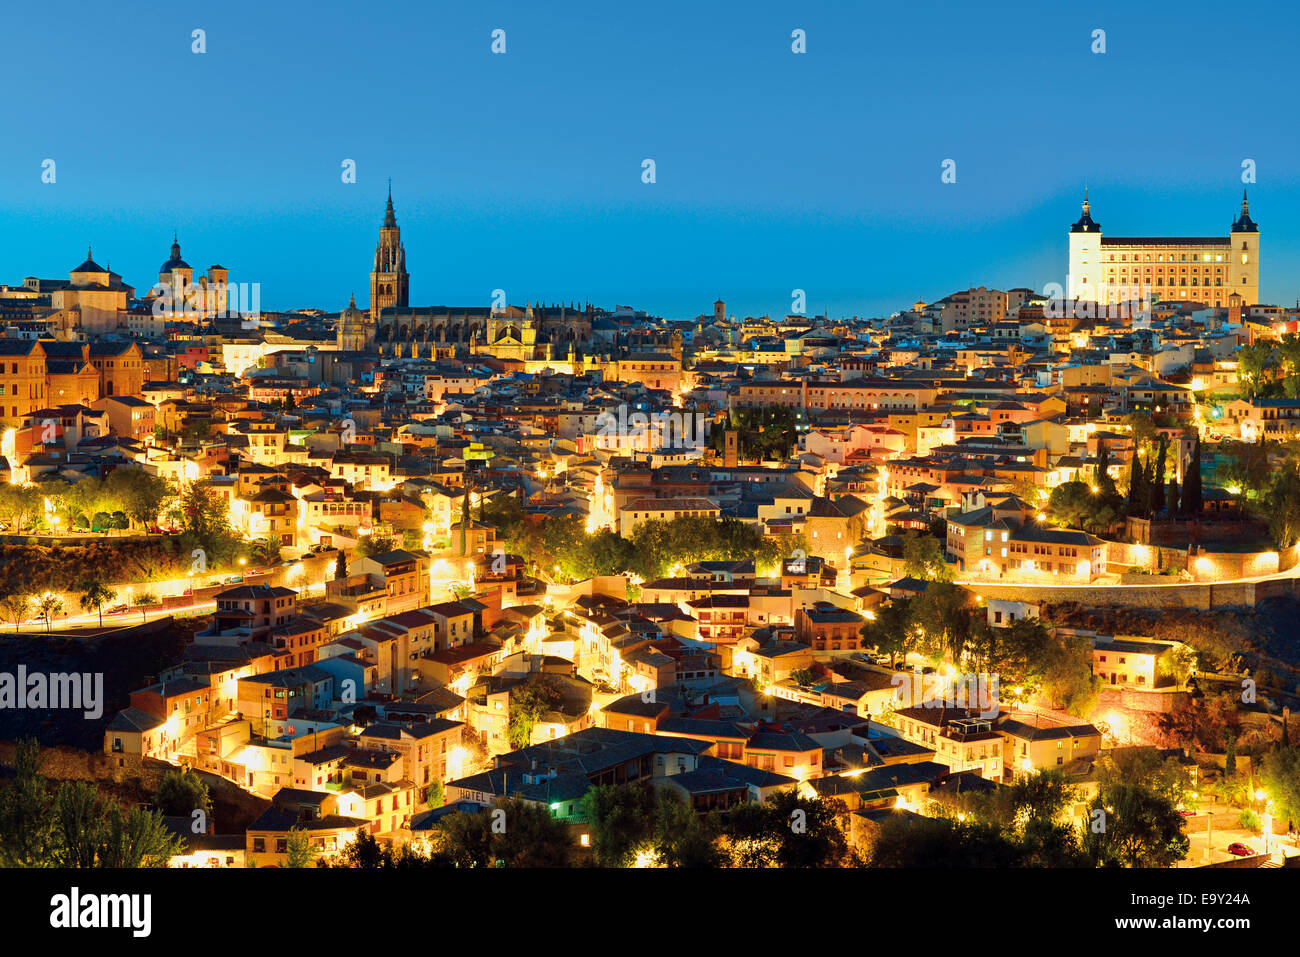 Spain, Castilla-La Mancha:Evening view of historic town of Toledo Stock Photo